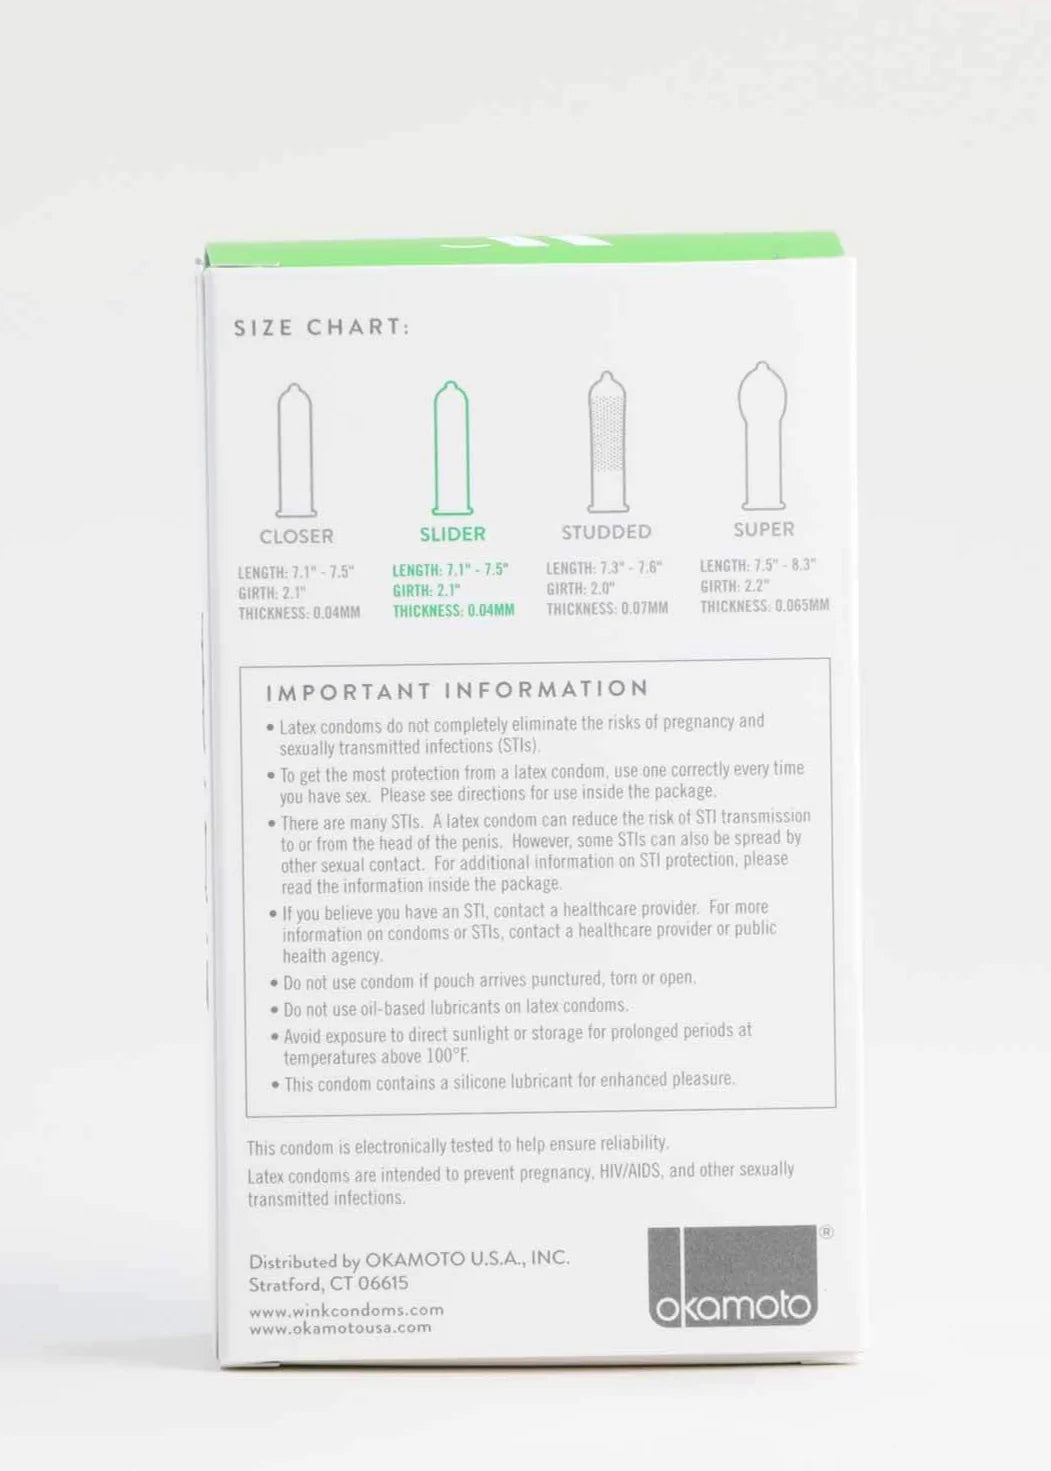 Wink Slider Naturally Lubricated • Latex Condom